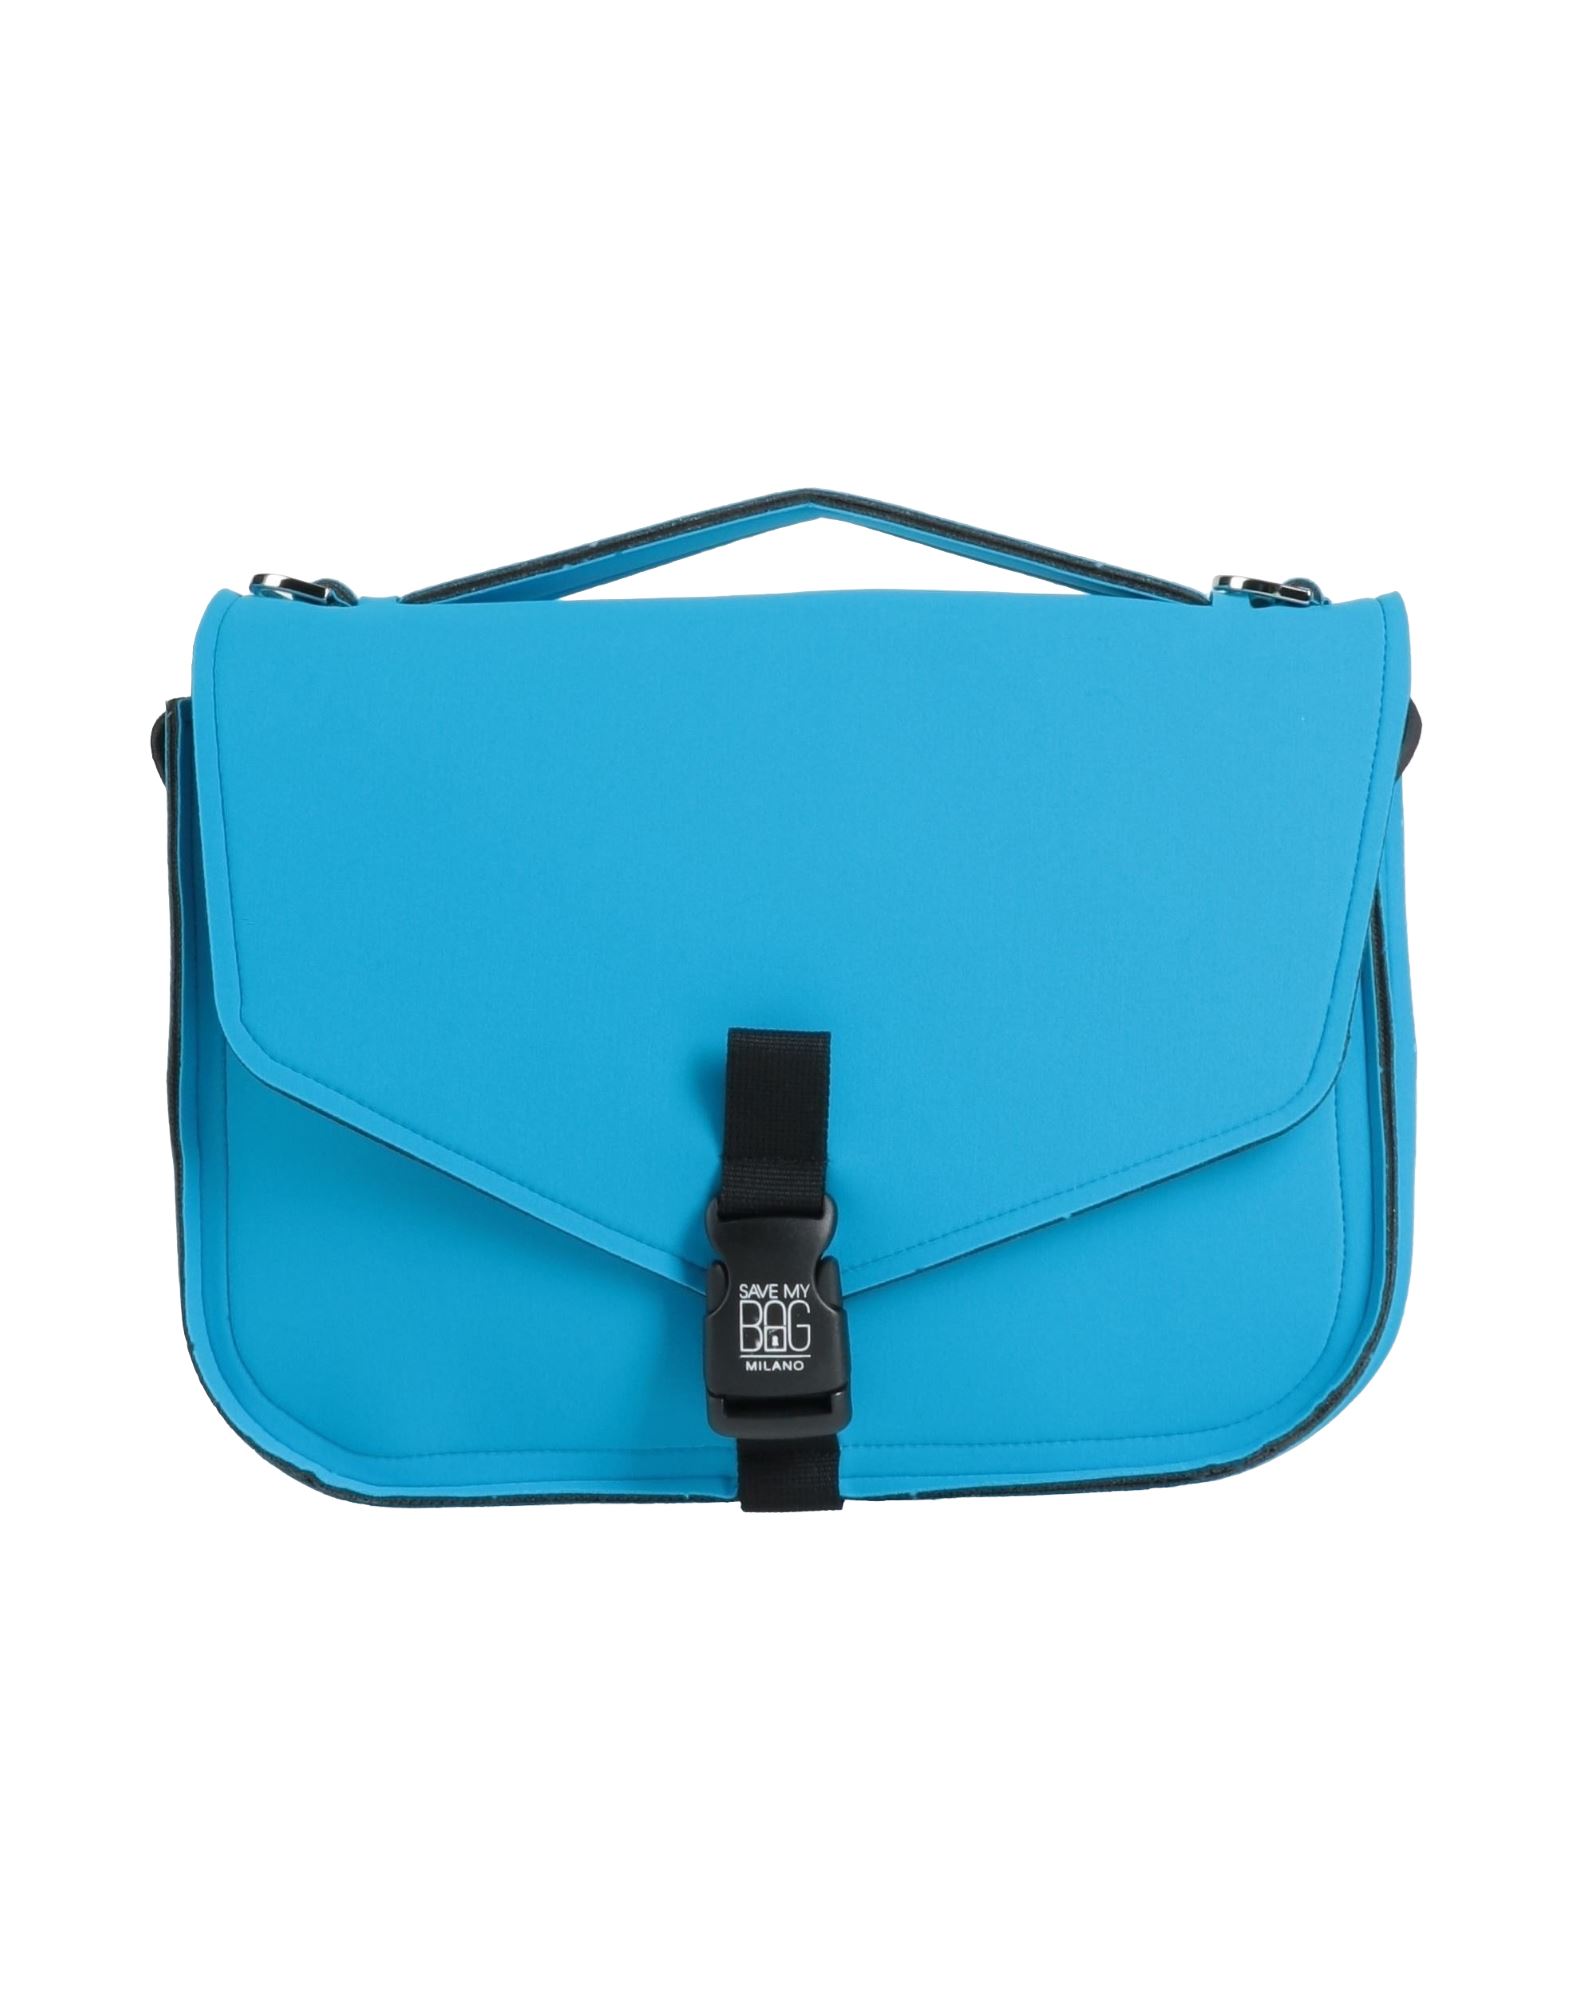 Save My Bag Handbags In Blue